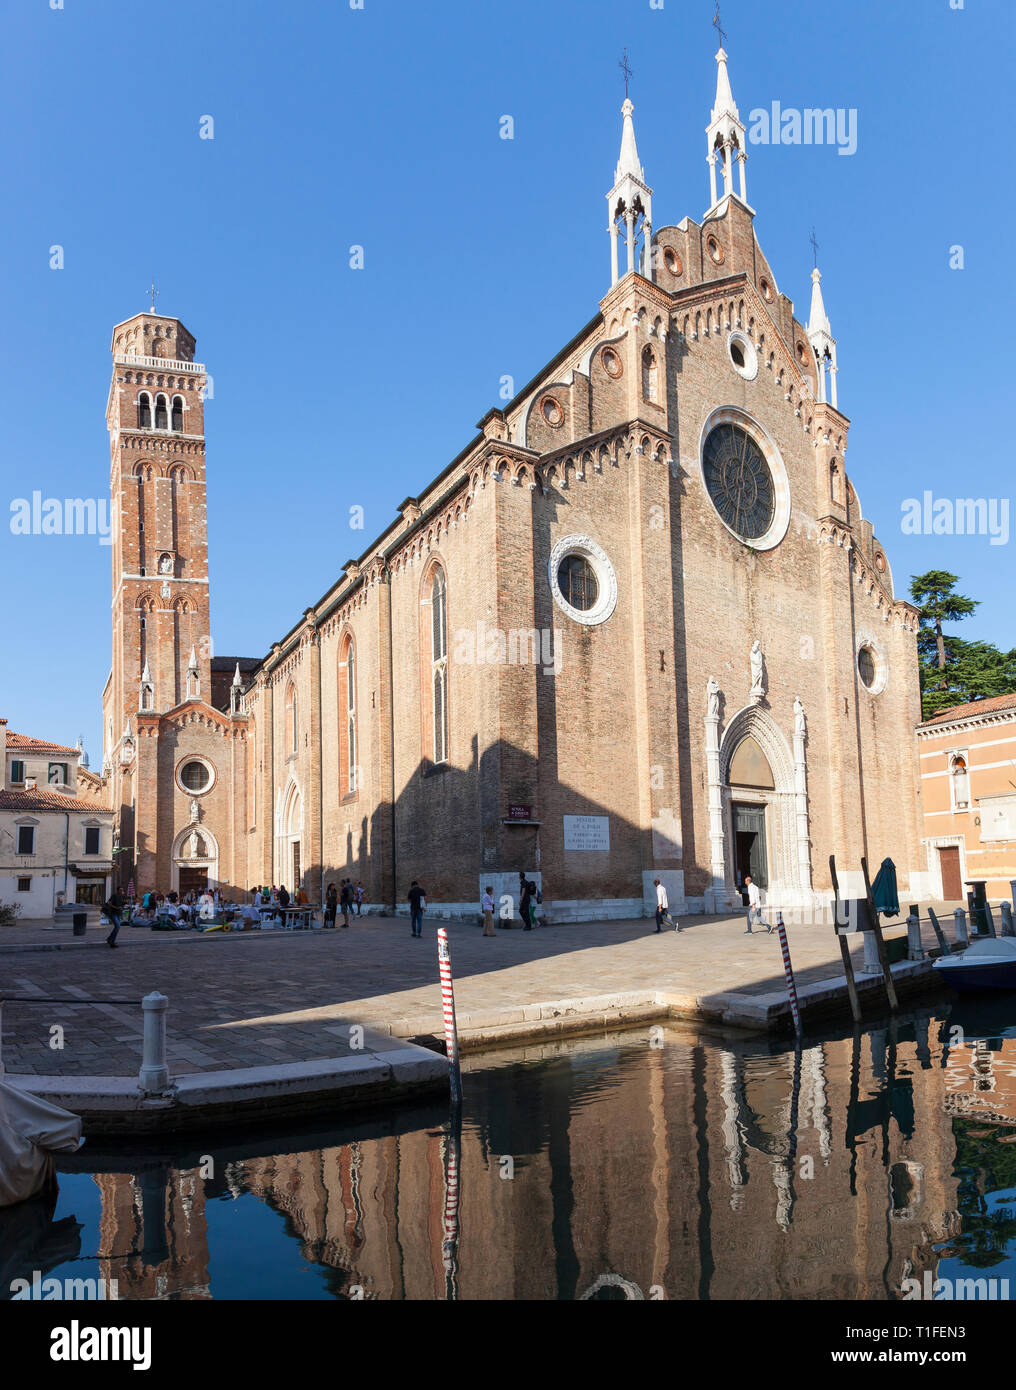 Basilica di Santa Maria Gloriosa dei Frari, Campo dei Frari, San Polo, Venice, Veneto, Italy, reflectiion on canal Rio Dei Frari Stock Photo